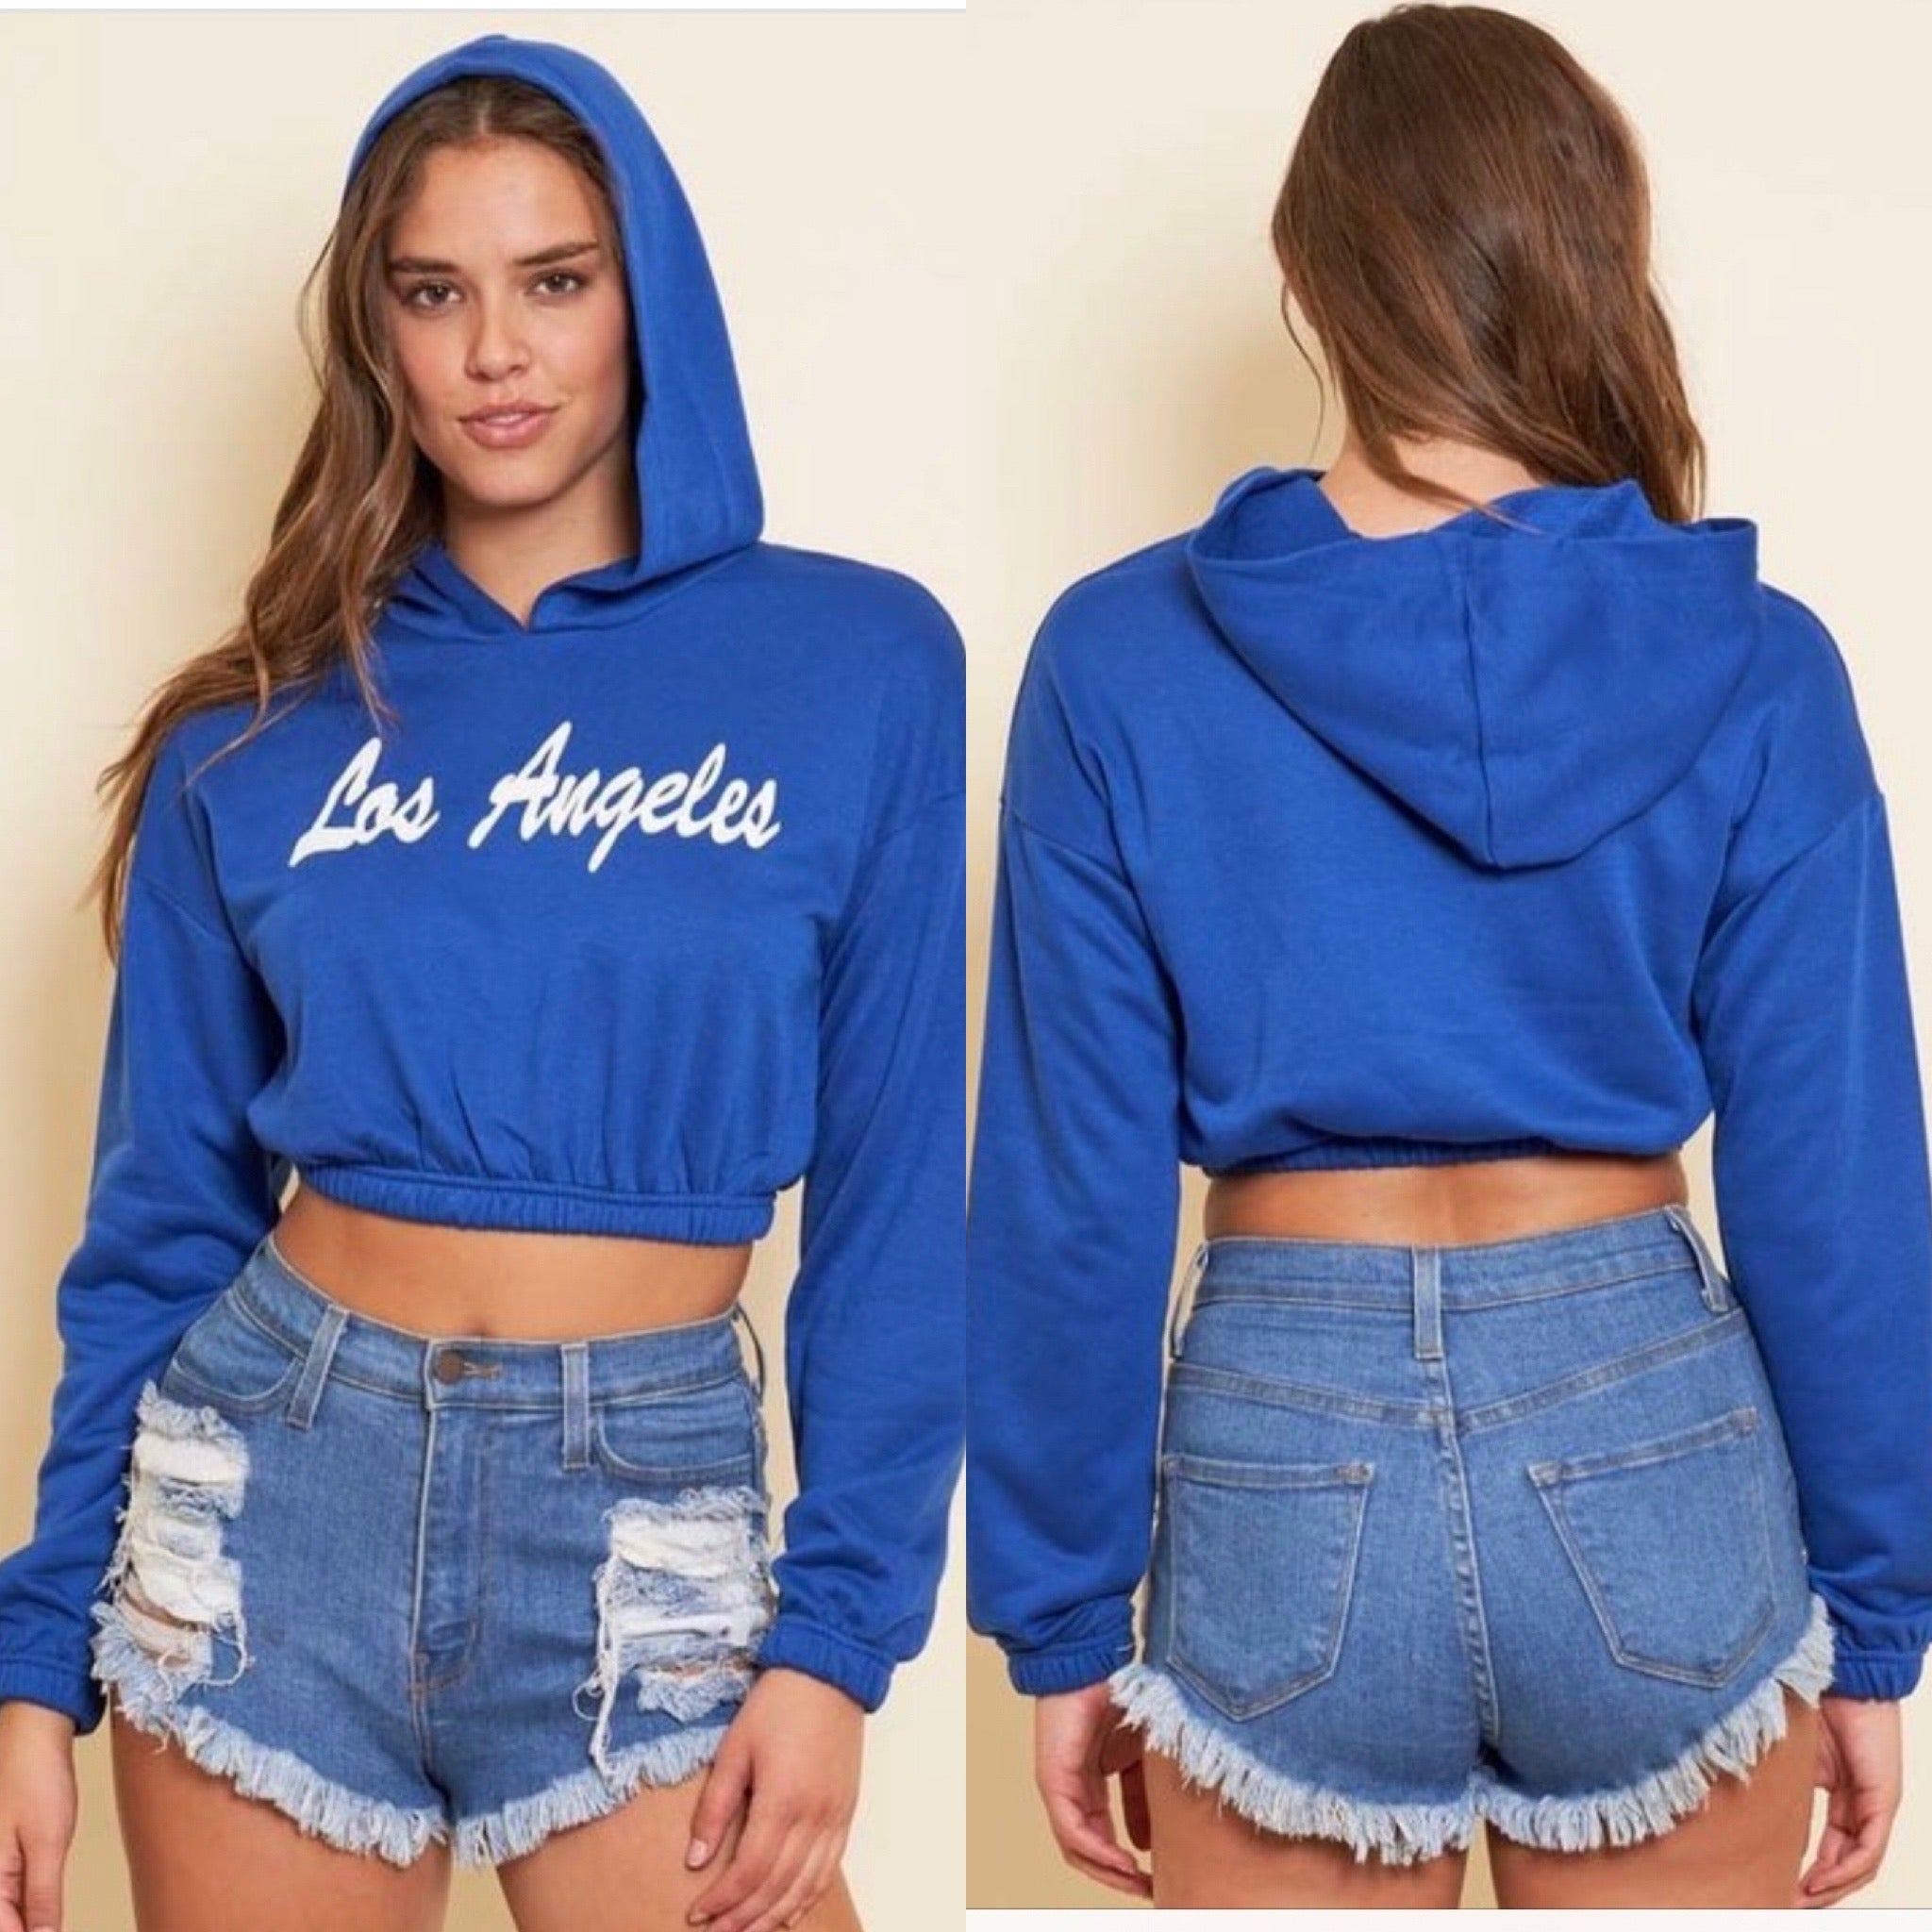 Los Angeles Crop Sweater - Royal Blue